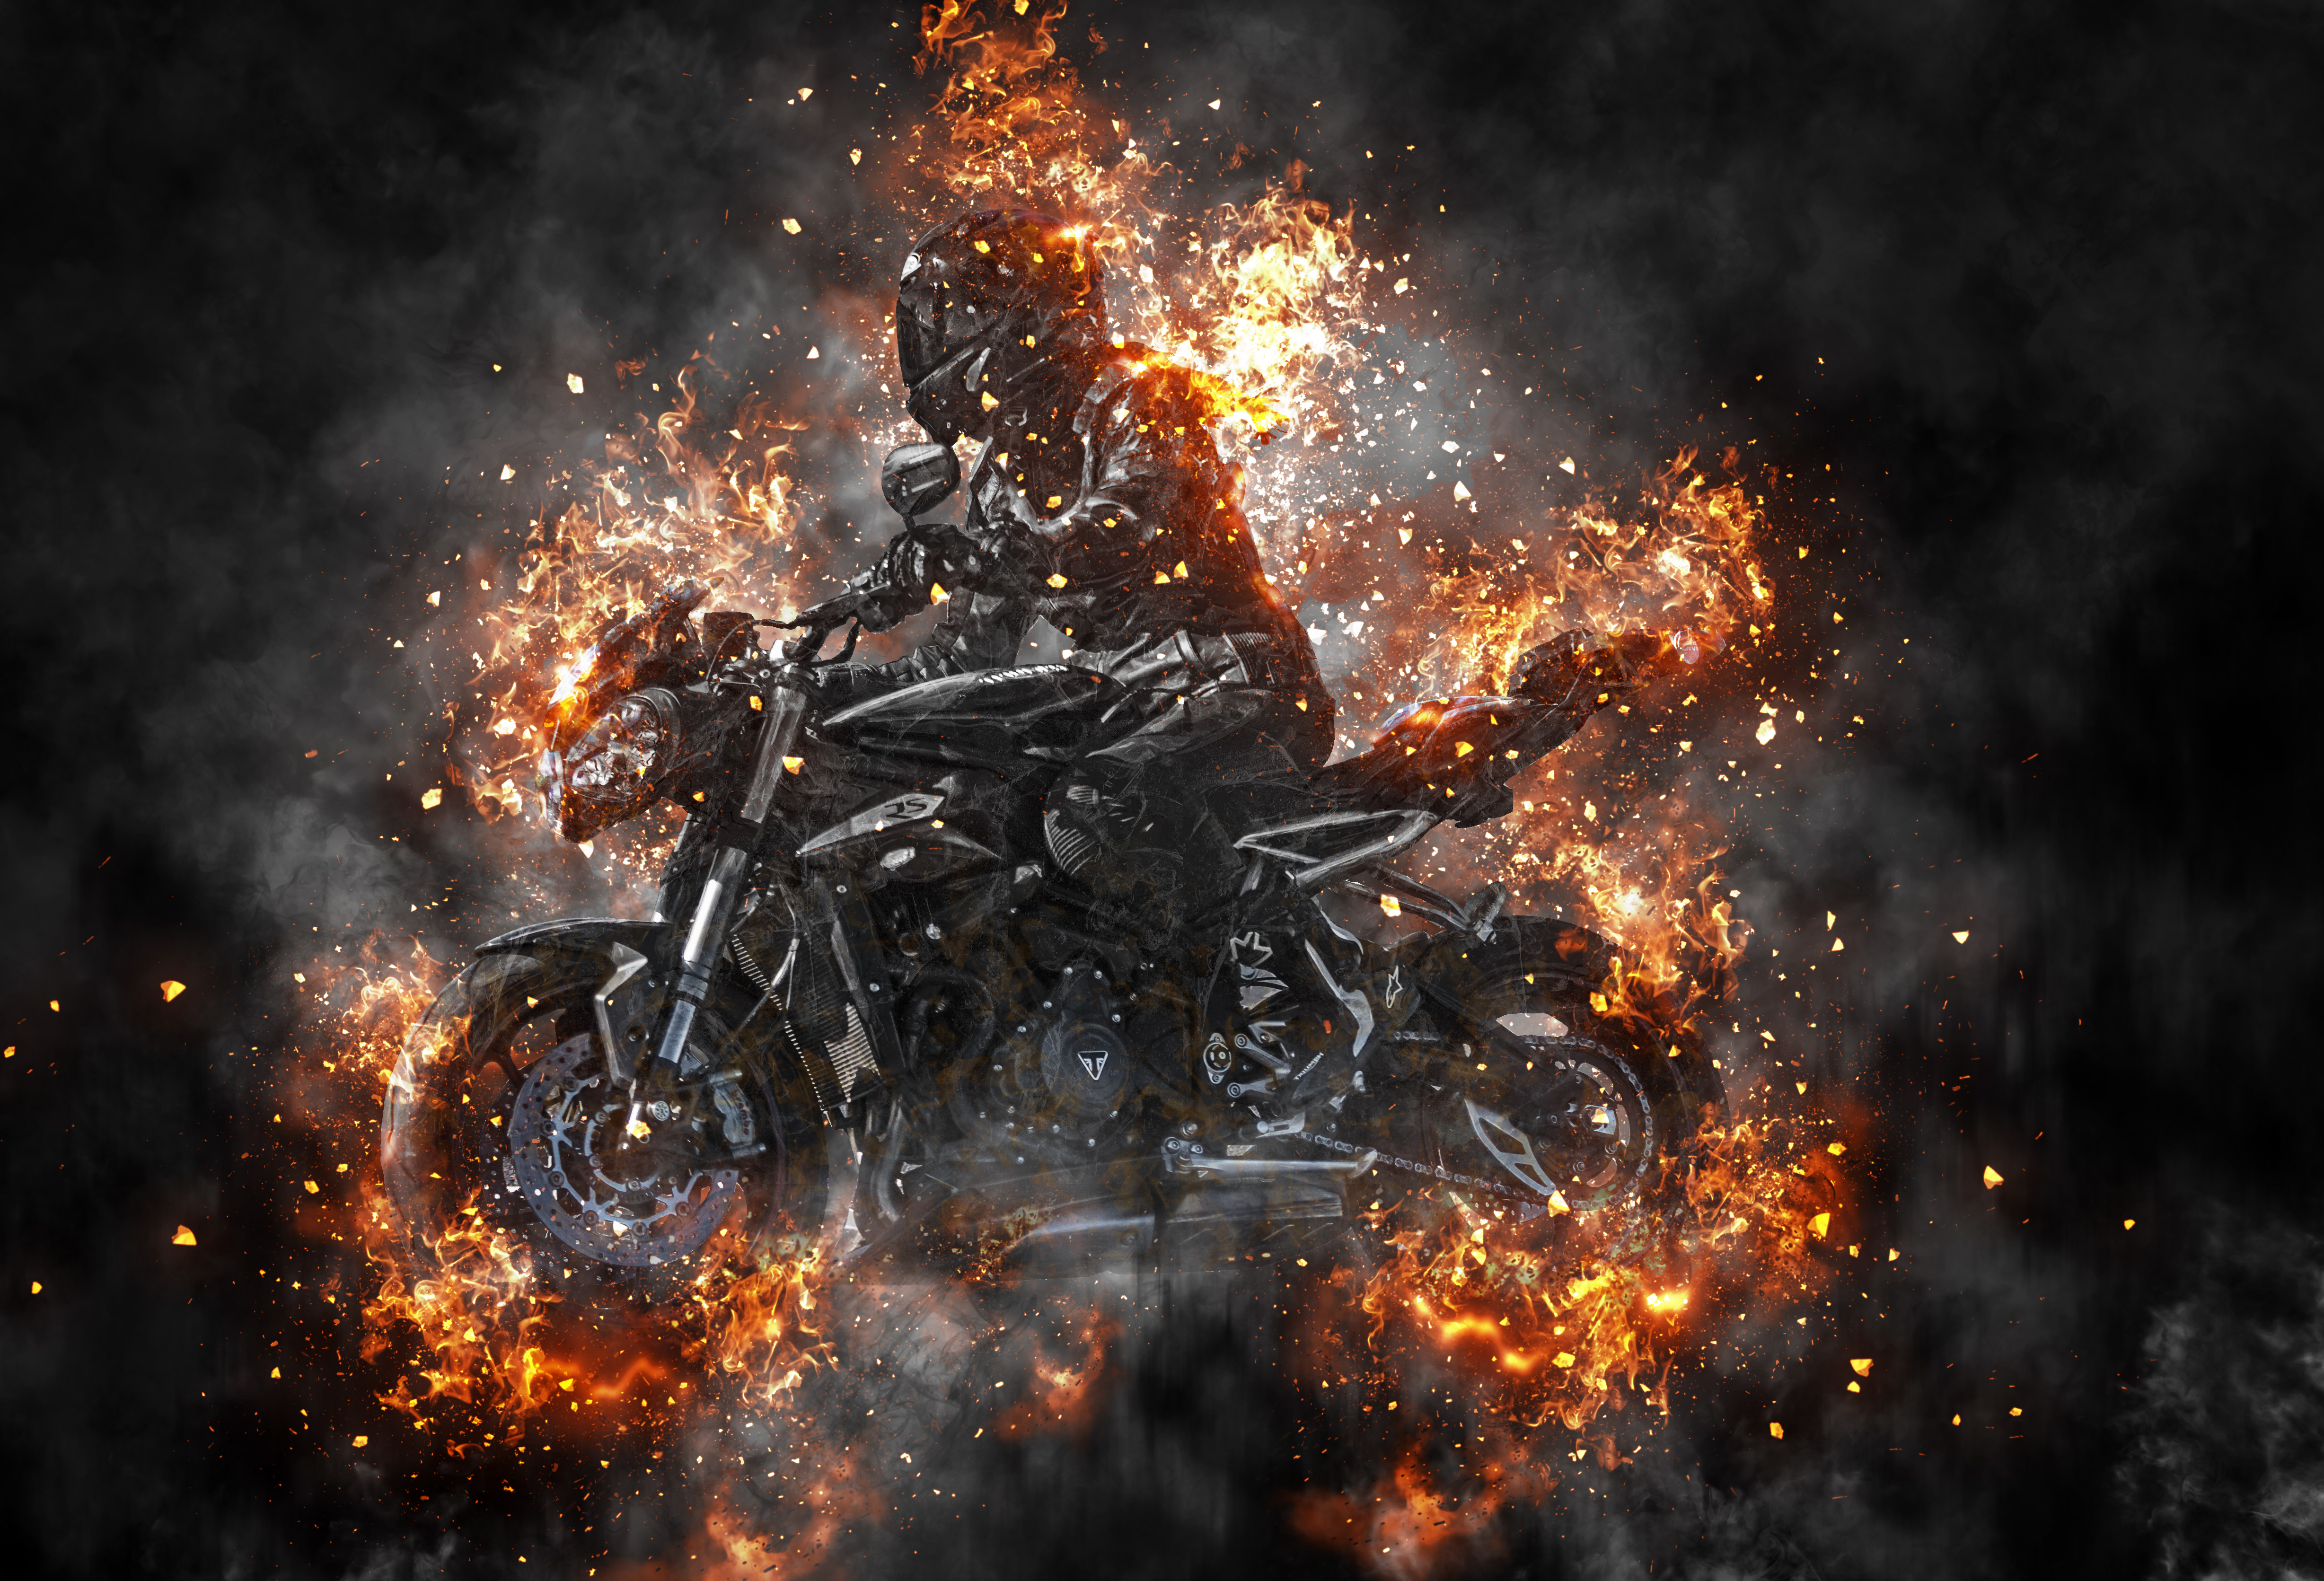 Fire Explosion Edit made by BikerPics 